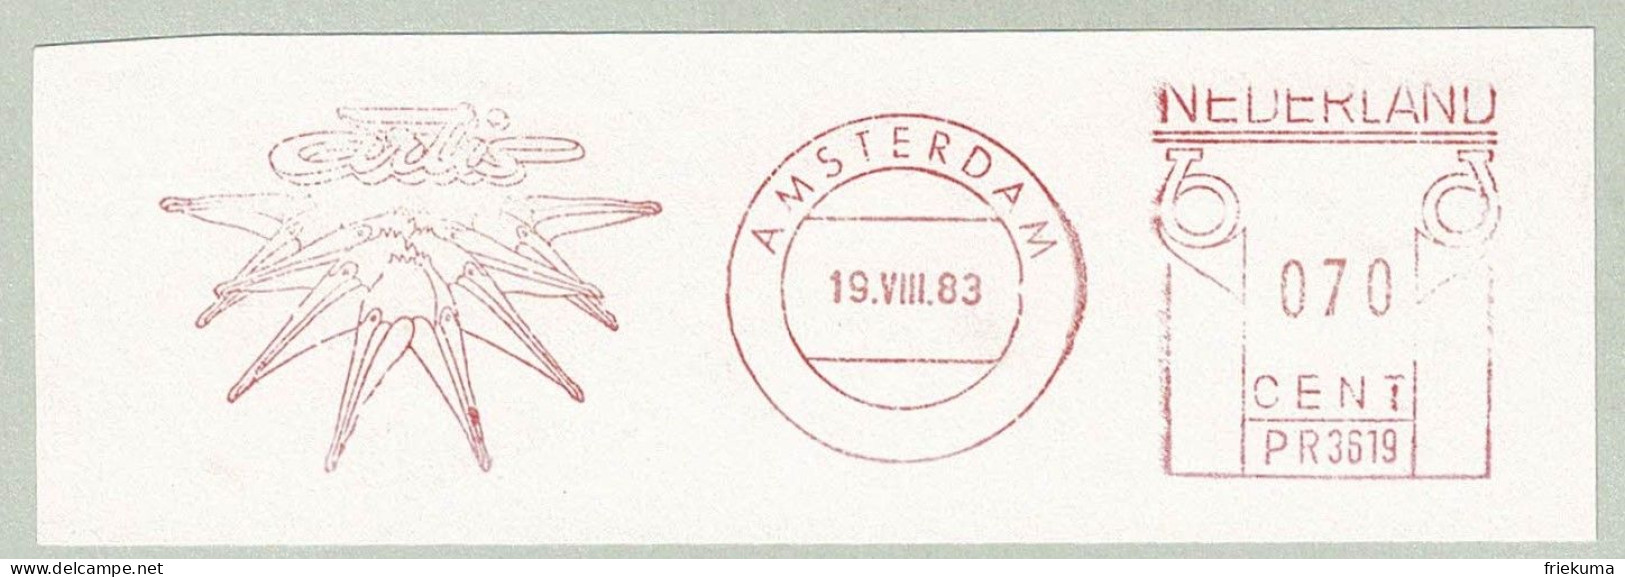 Niederlande / Nederland 1983, Freistempel / EMA / Meterstamp Amsterdam, Pelikane / Pelicans / Pelecanus - Pélicans